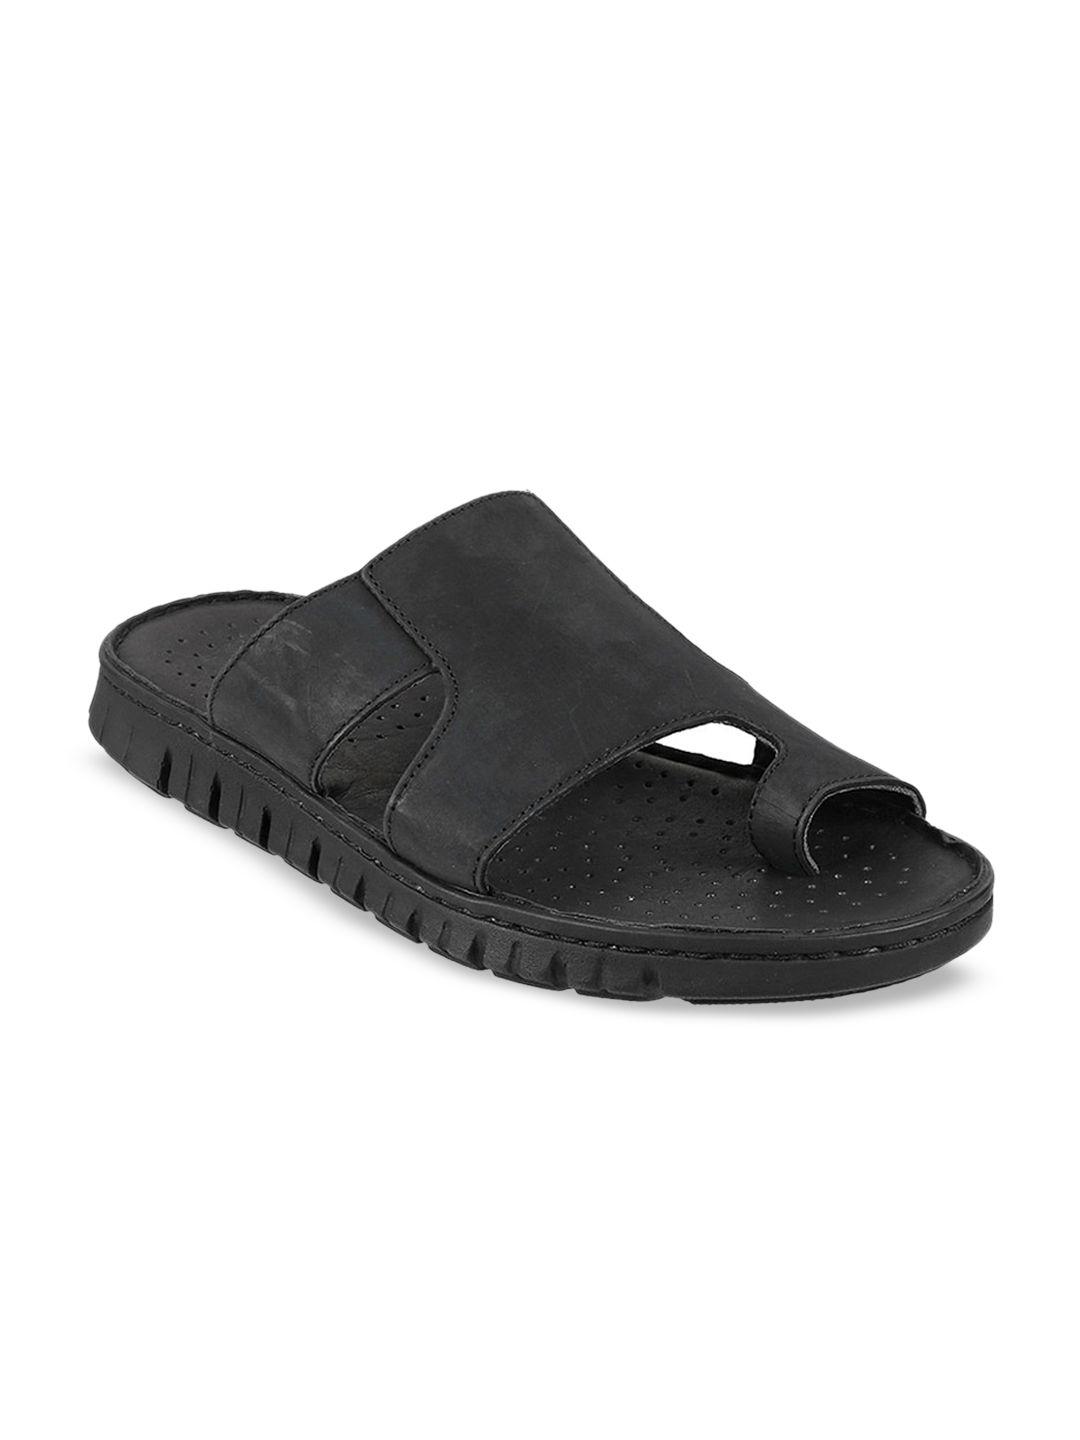 metro men black solid leather comfort sandals